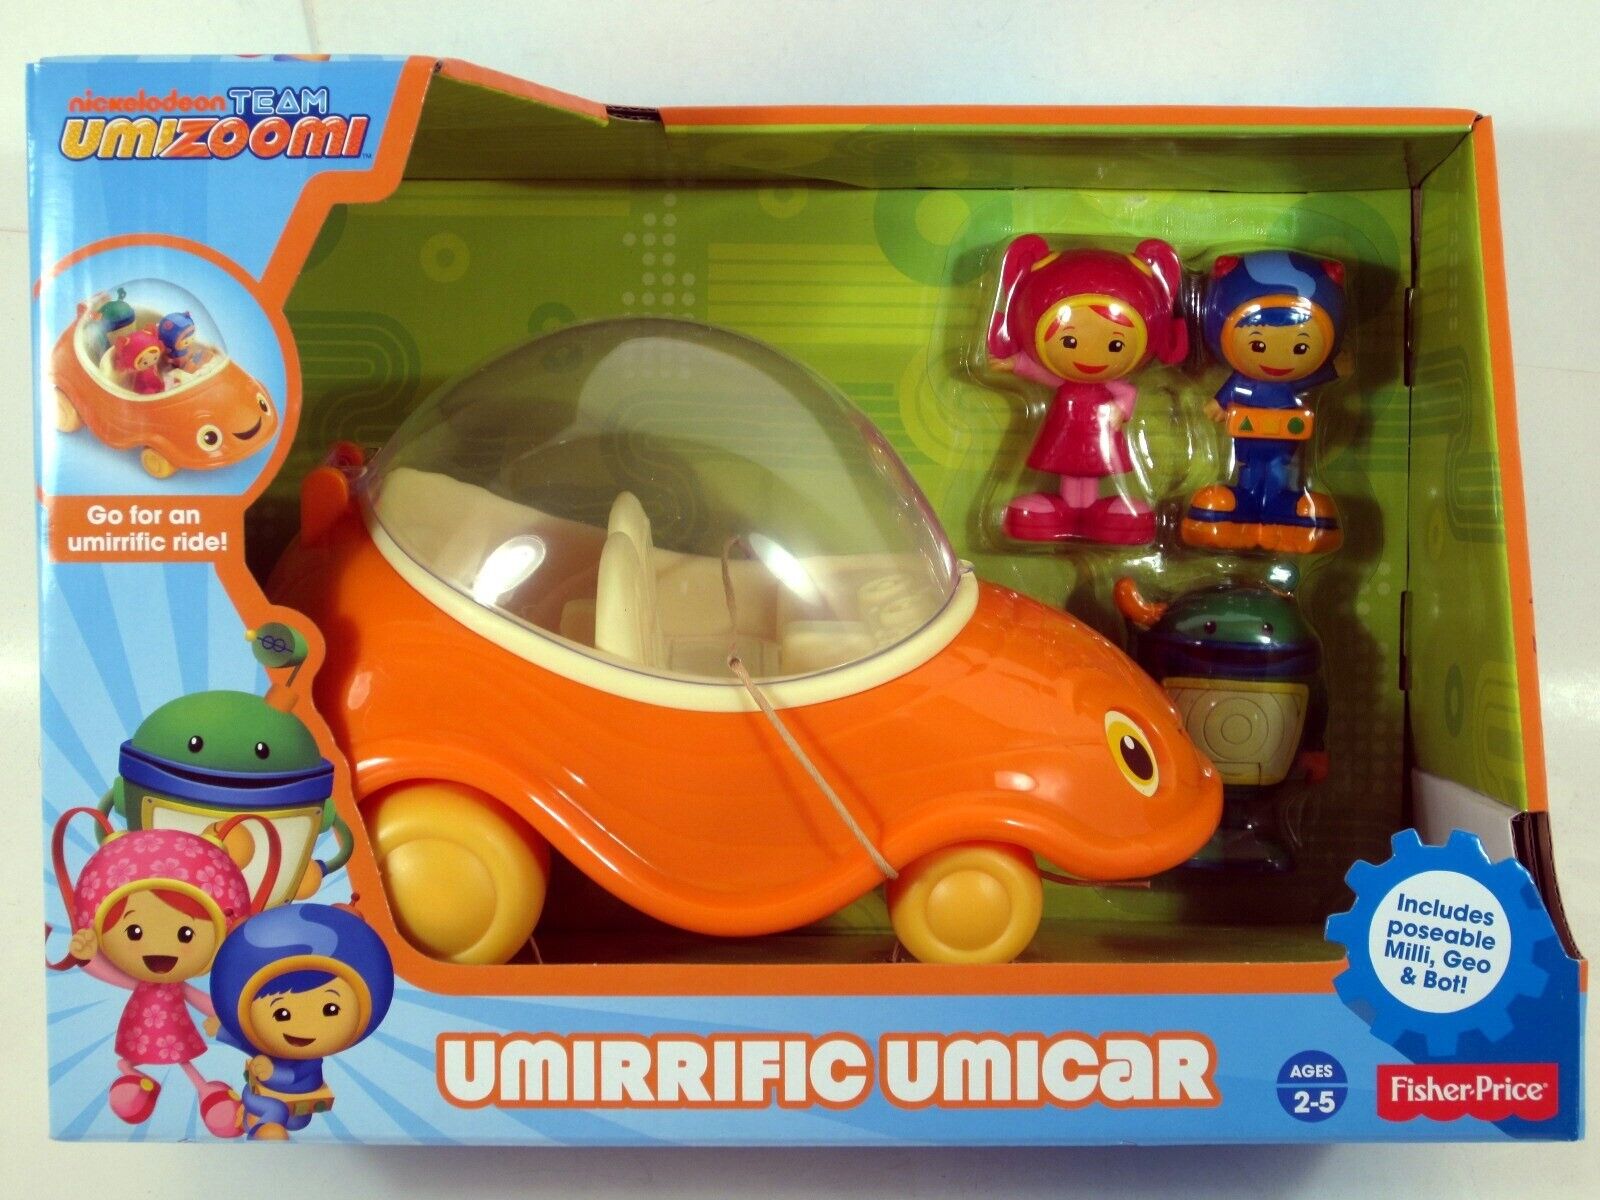 Fisher-Price Team Umizoomi UMIRRIFIC UMICAR with Geo, Milli & Bot UMI CAR New!